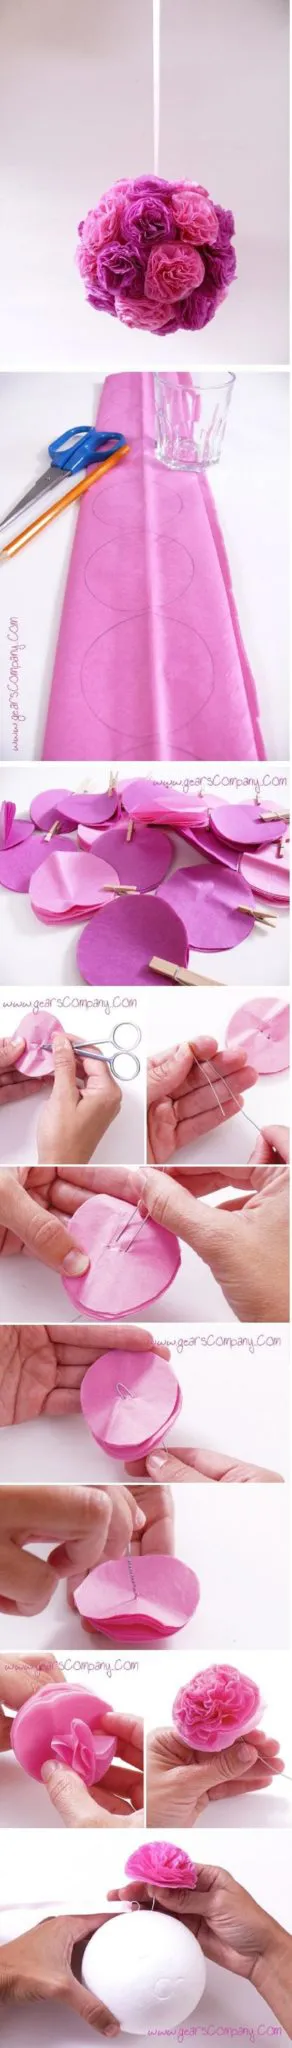 DIY Paper Flower Tutorial - 15 Whimsical DIY Party Decoration Tutorials…: 